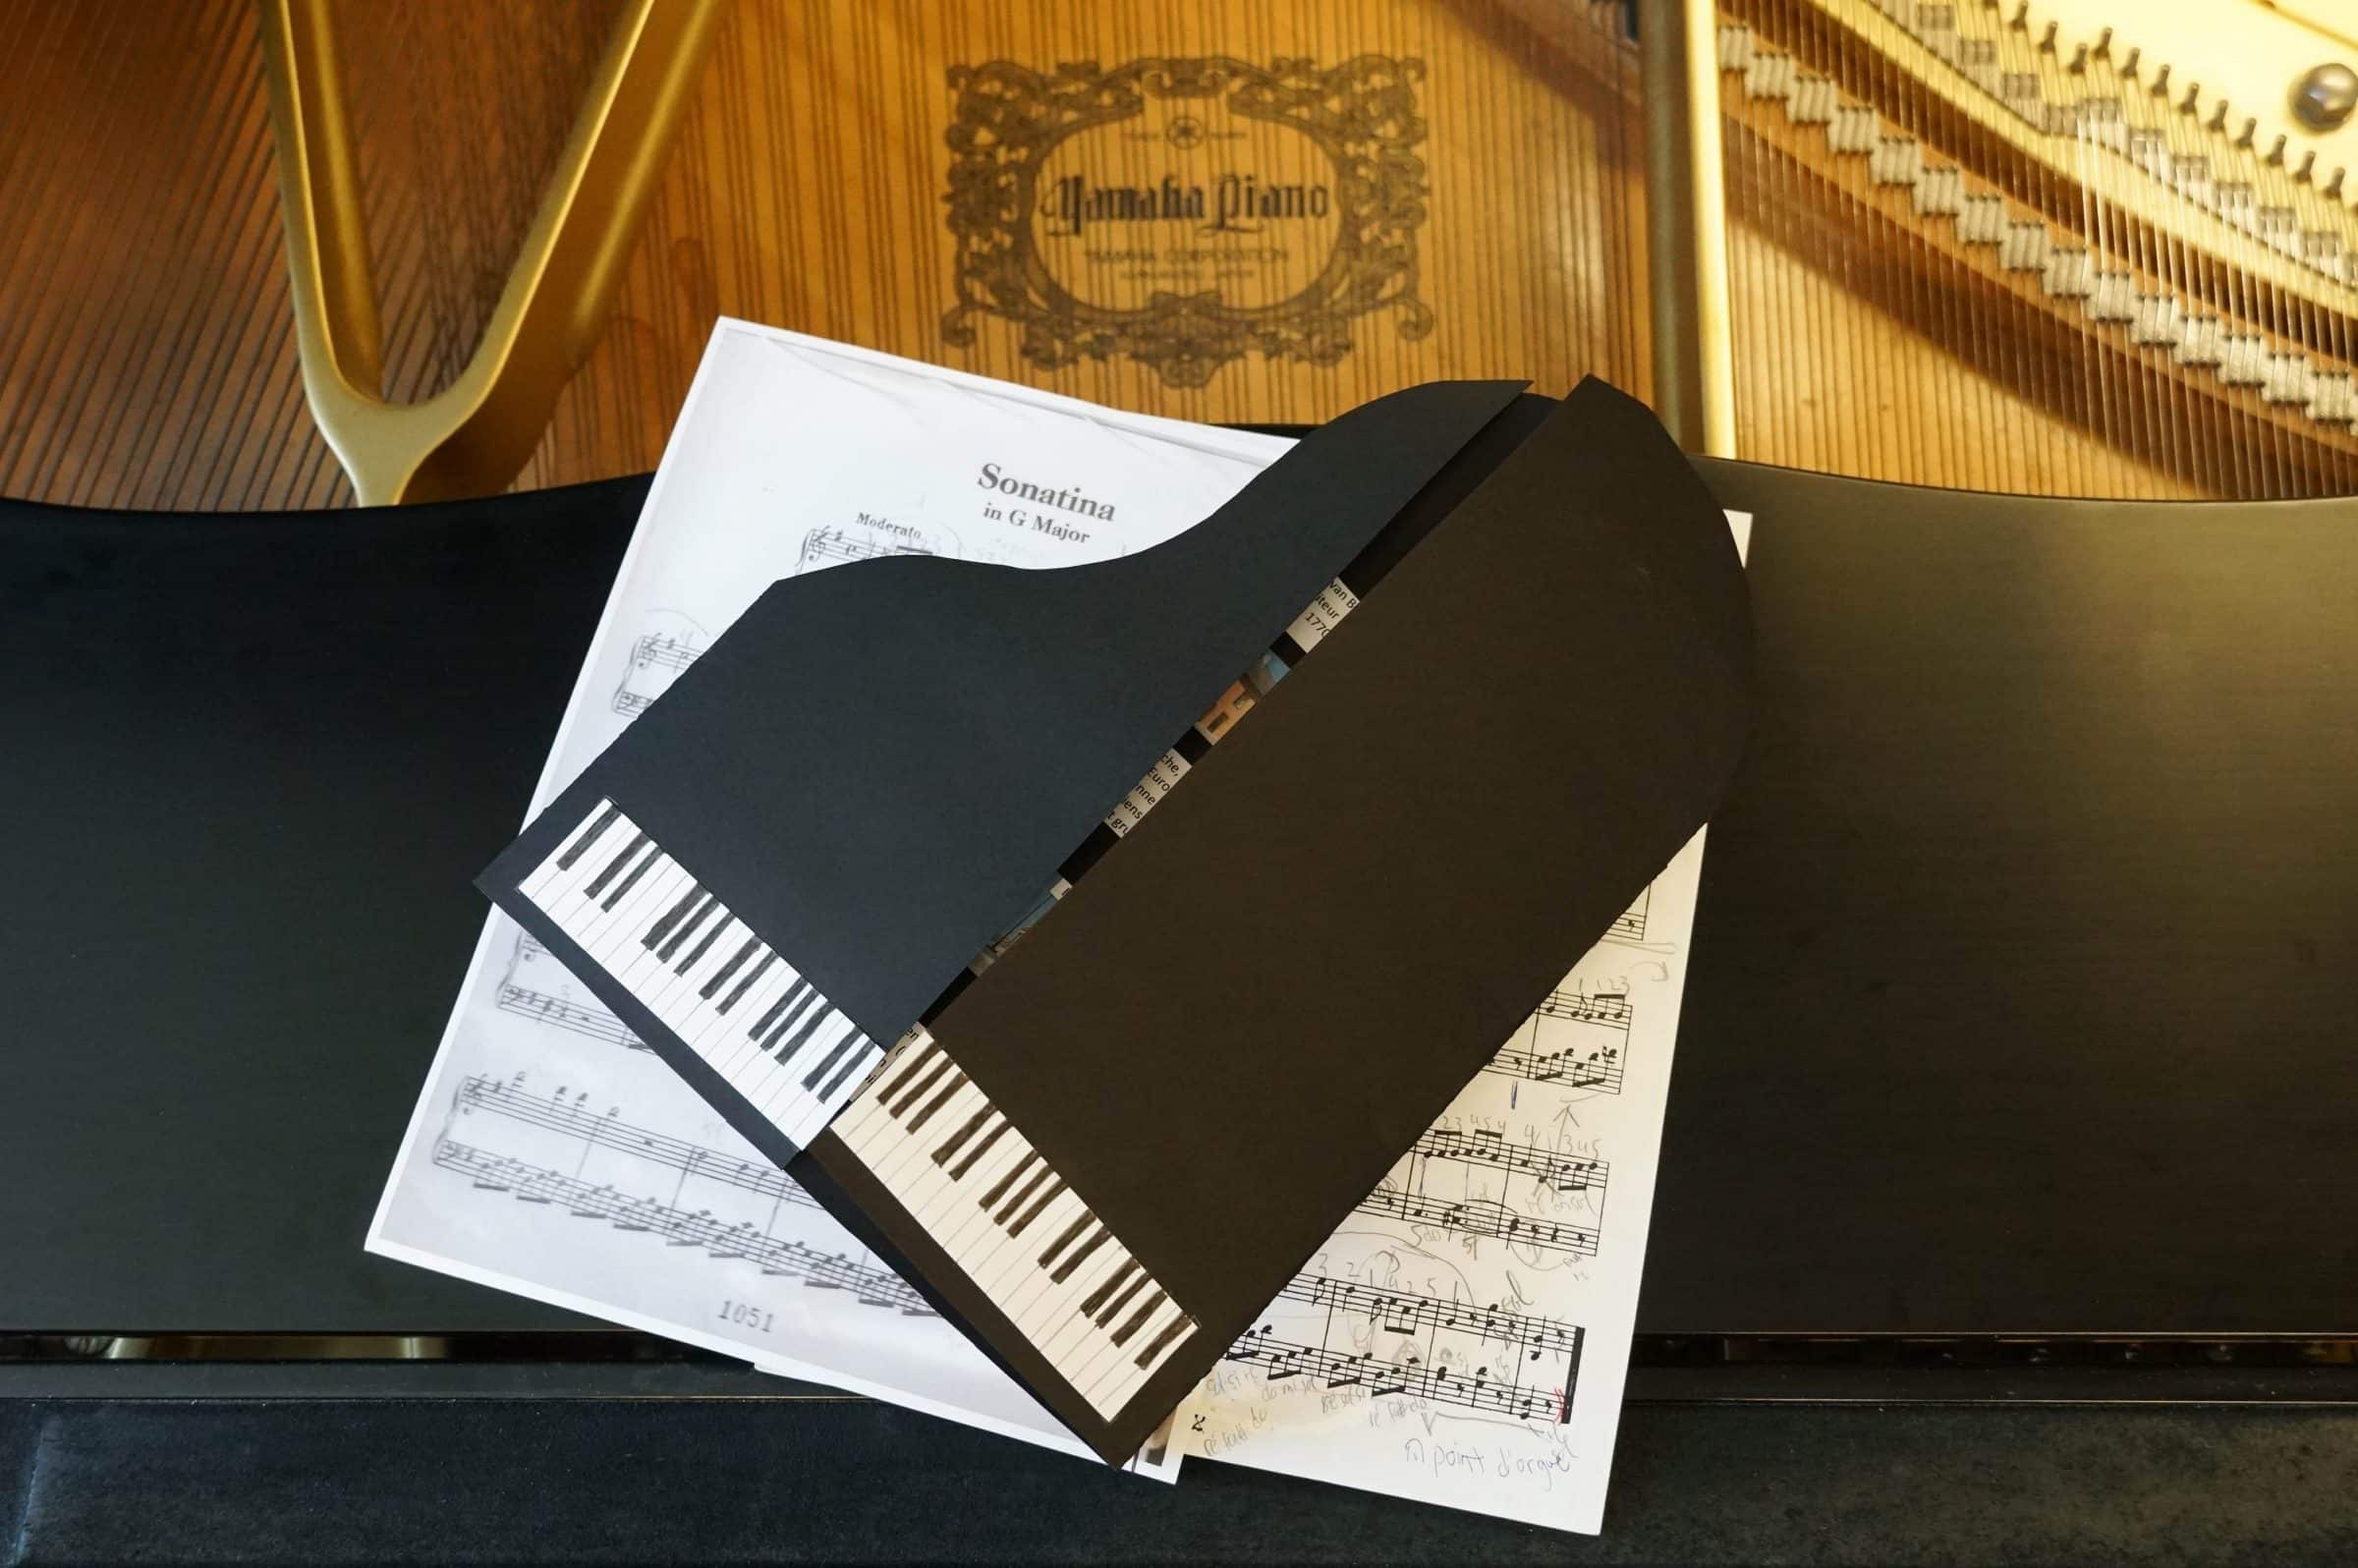 Beethoven piano lapbook